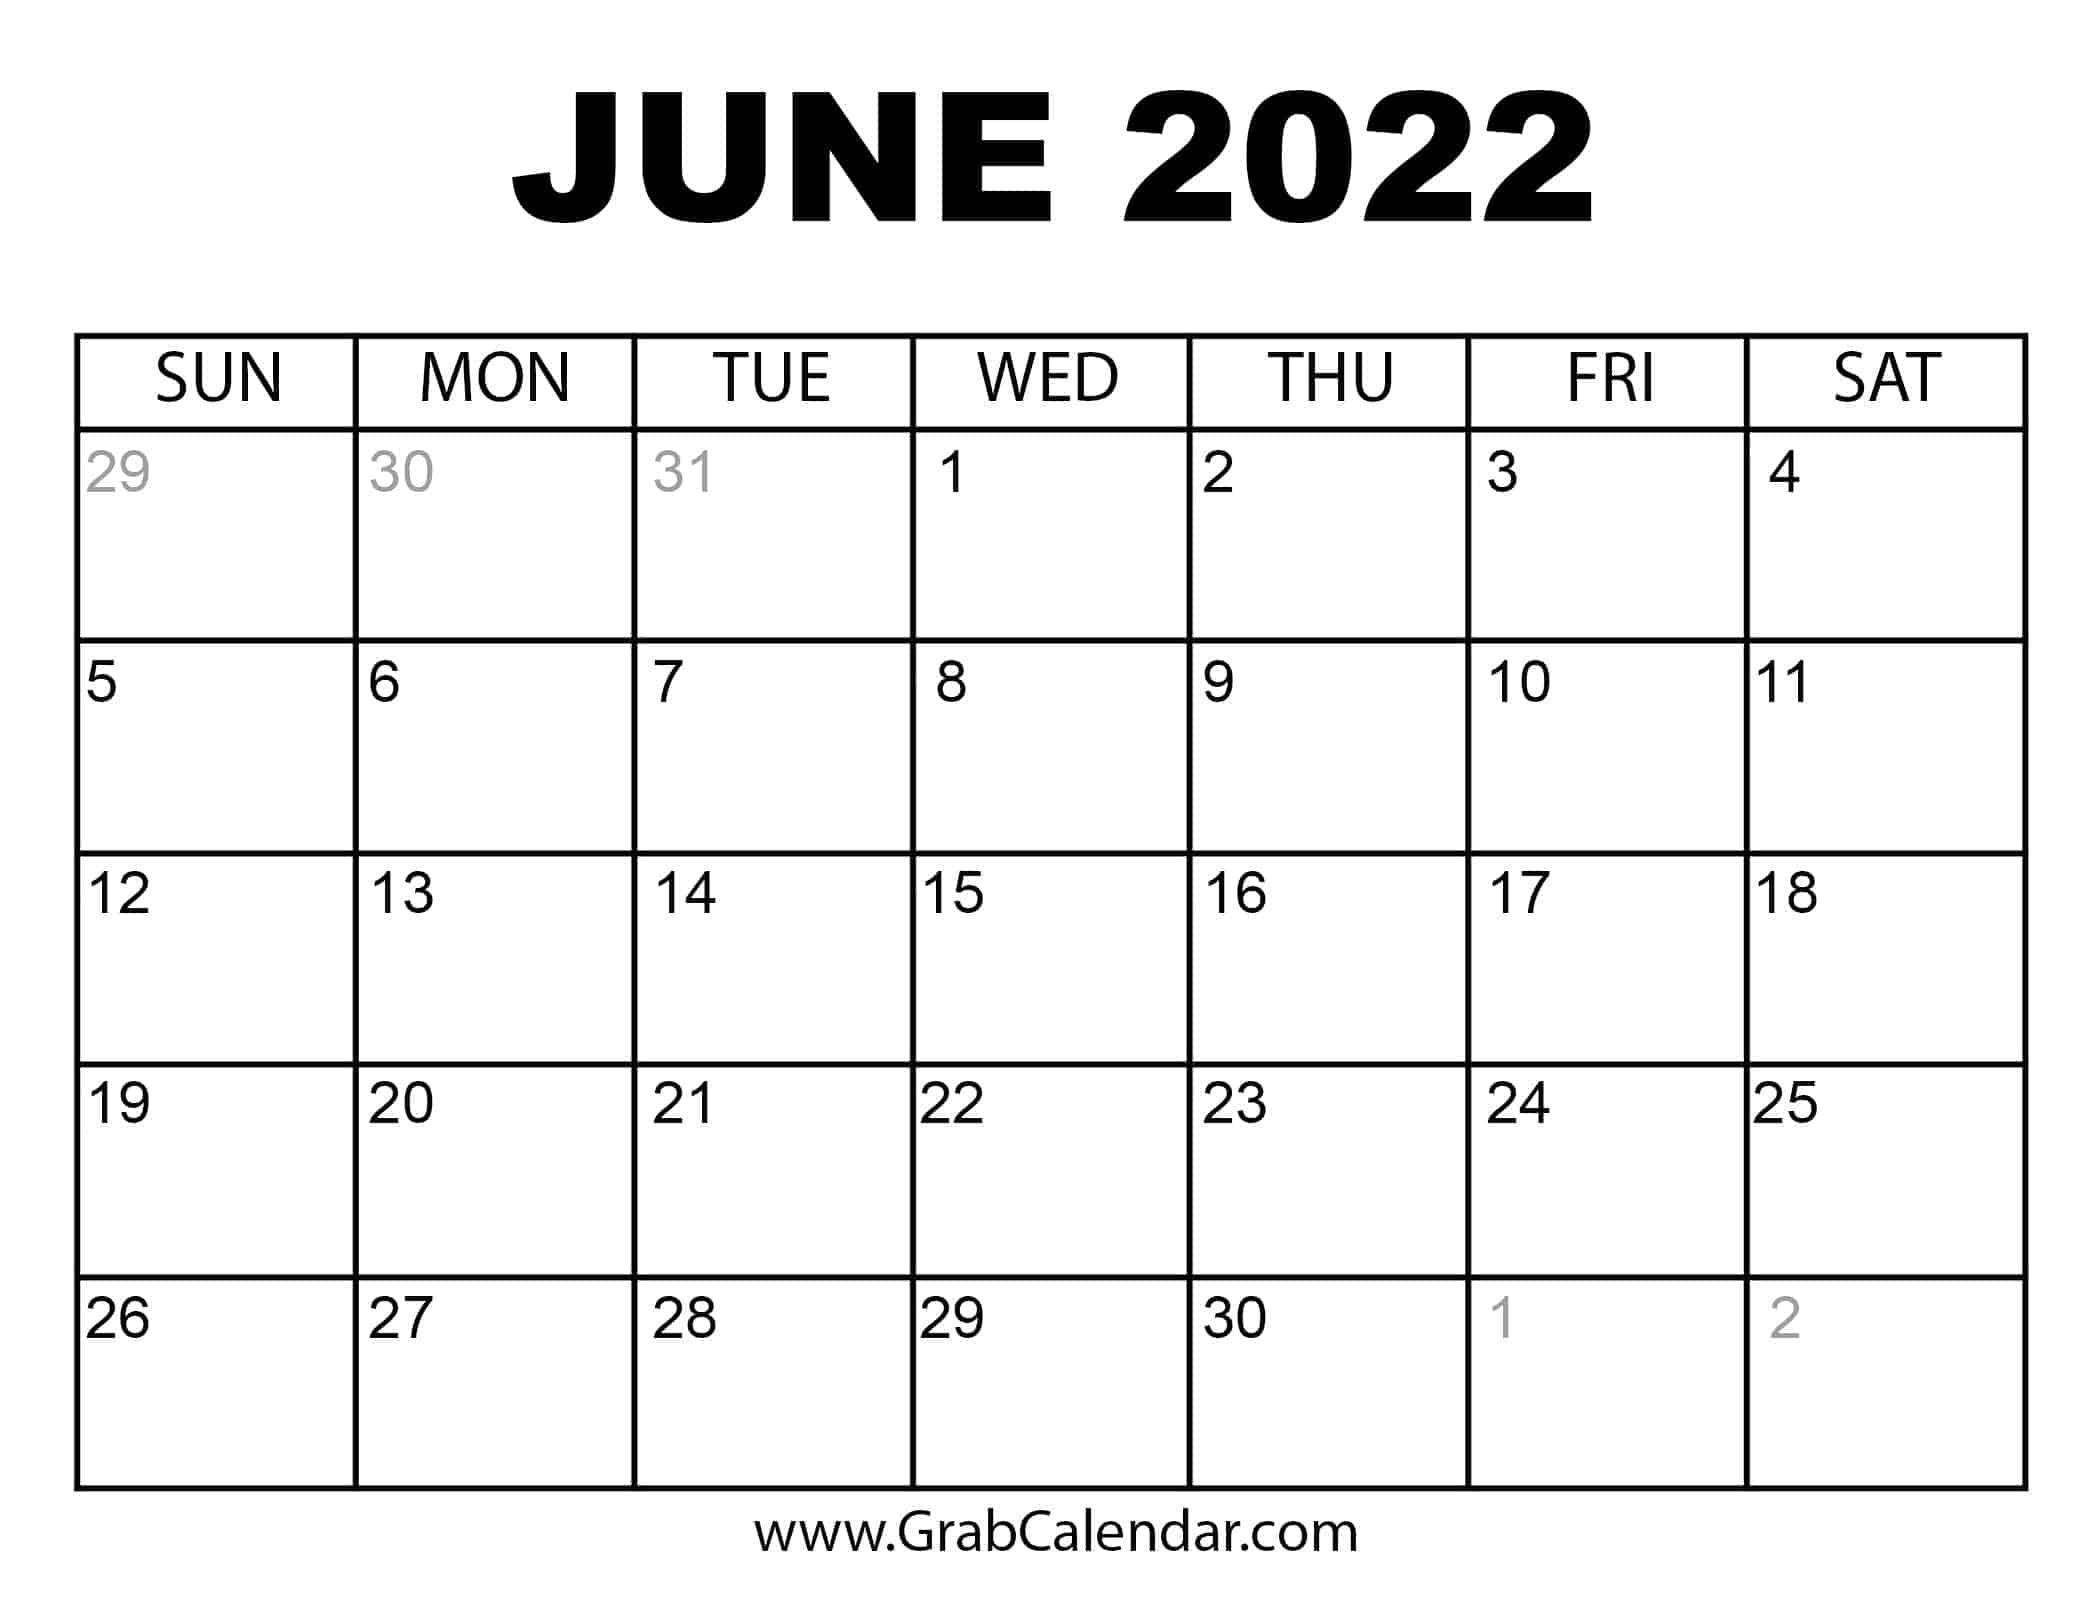 June 2022 Calendar With Holidays Printable June 2022 Calendar